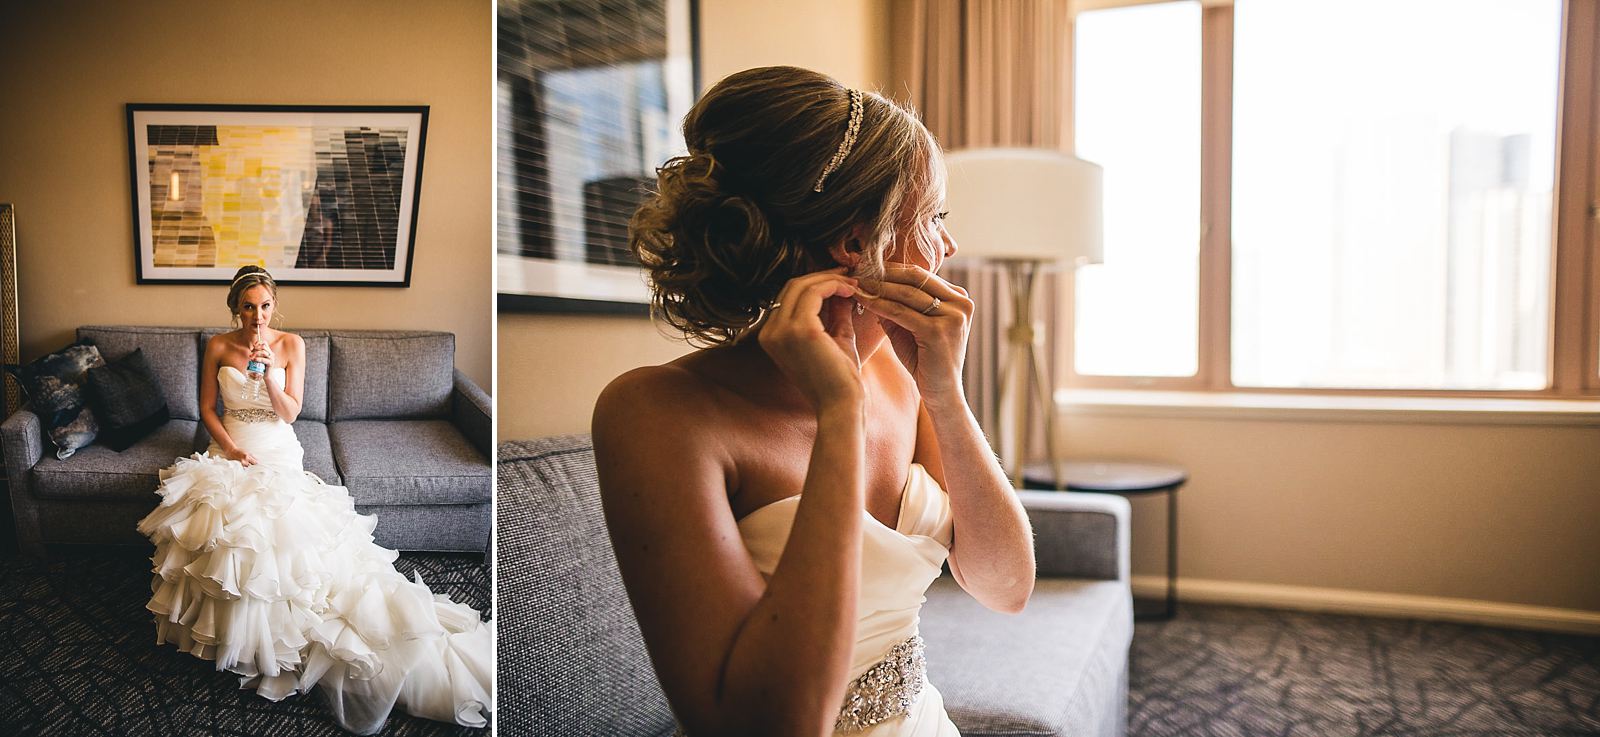 09 bride putting on earings - Mid America Club Wedding Photography / Hannah + Jay